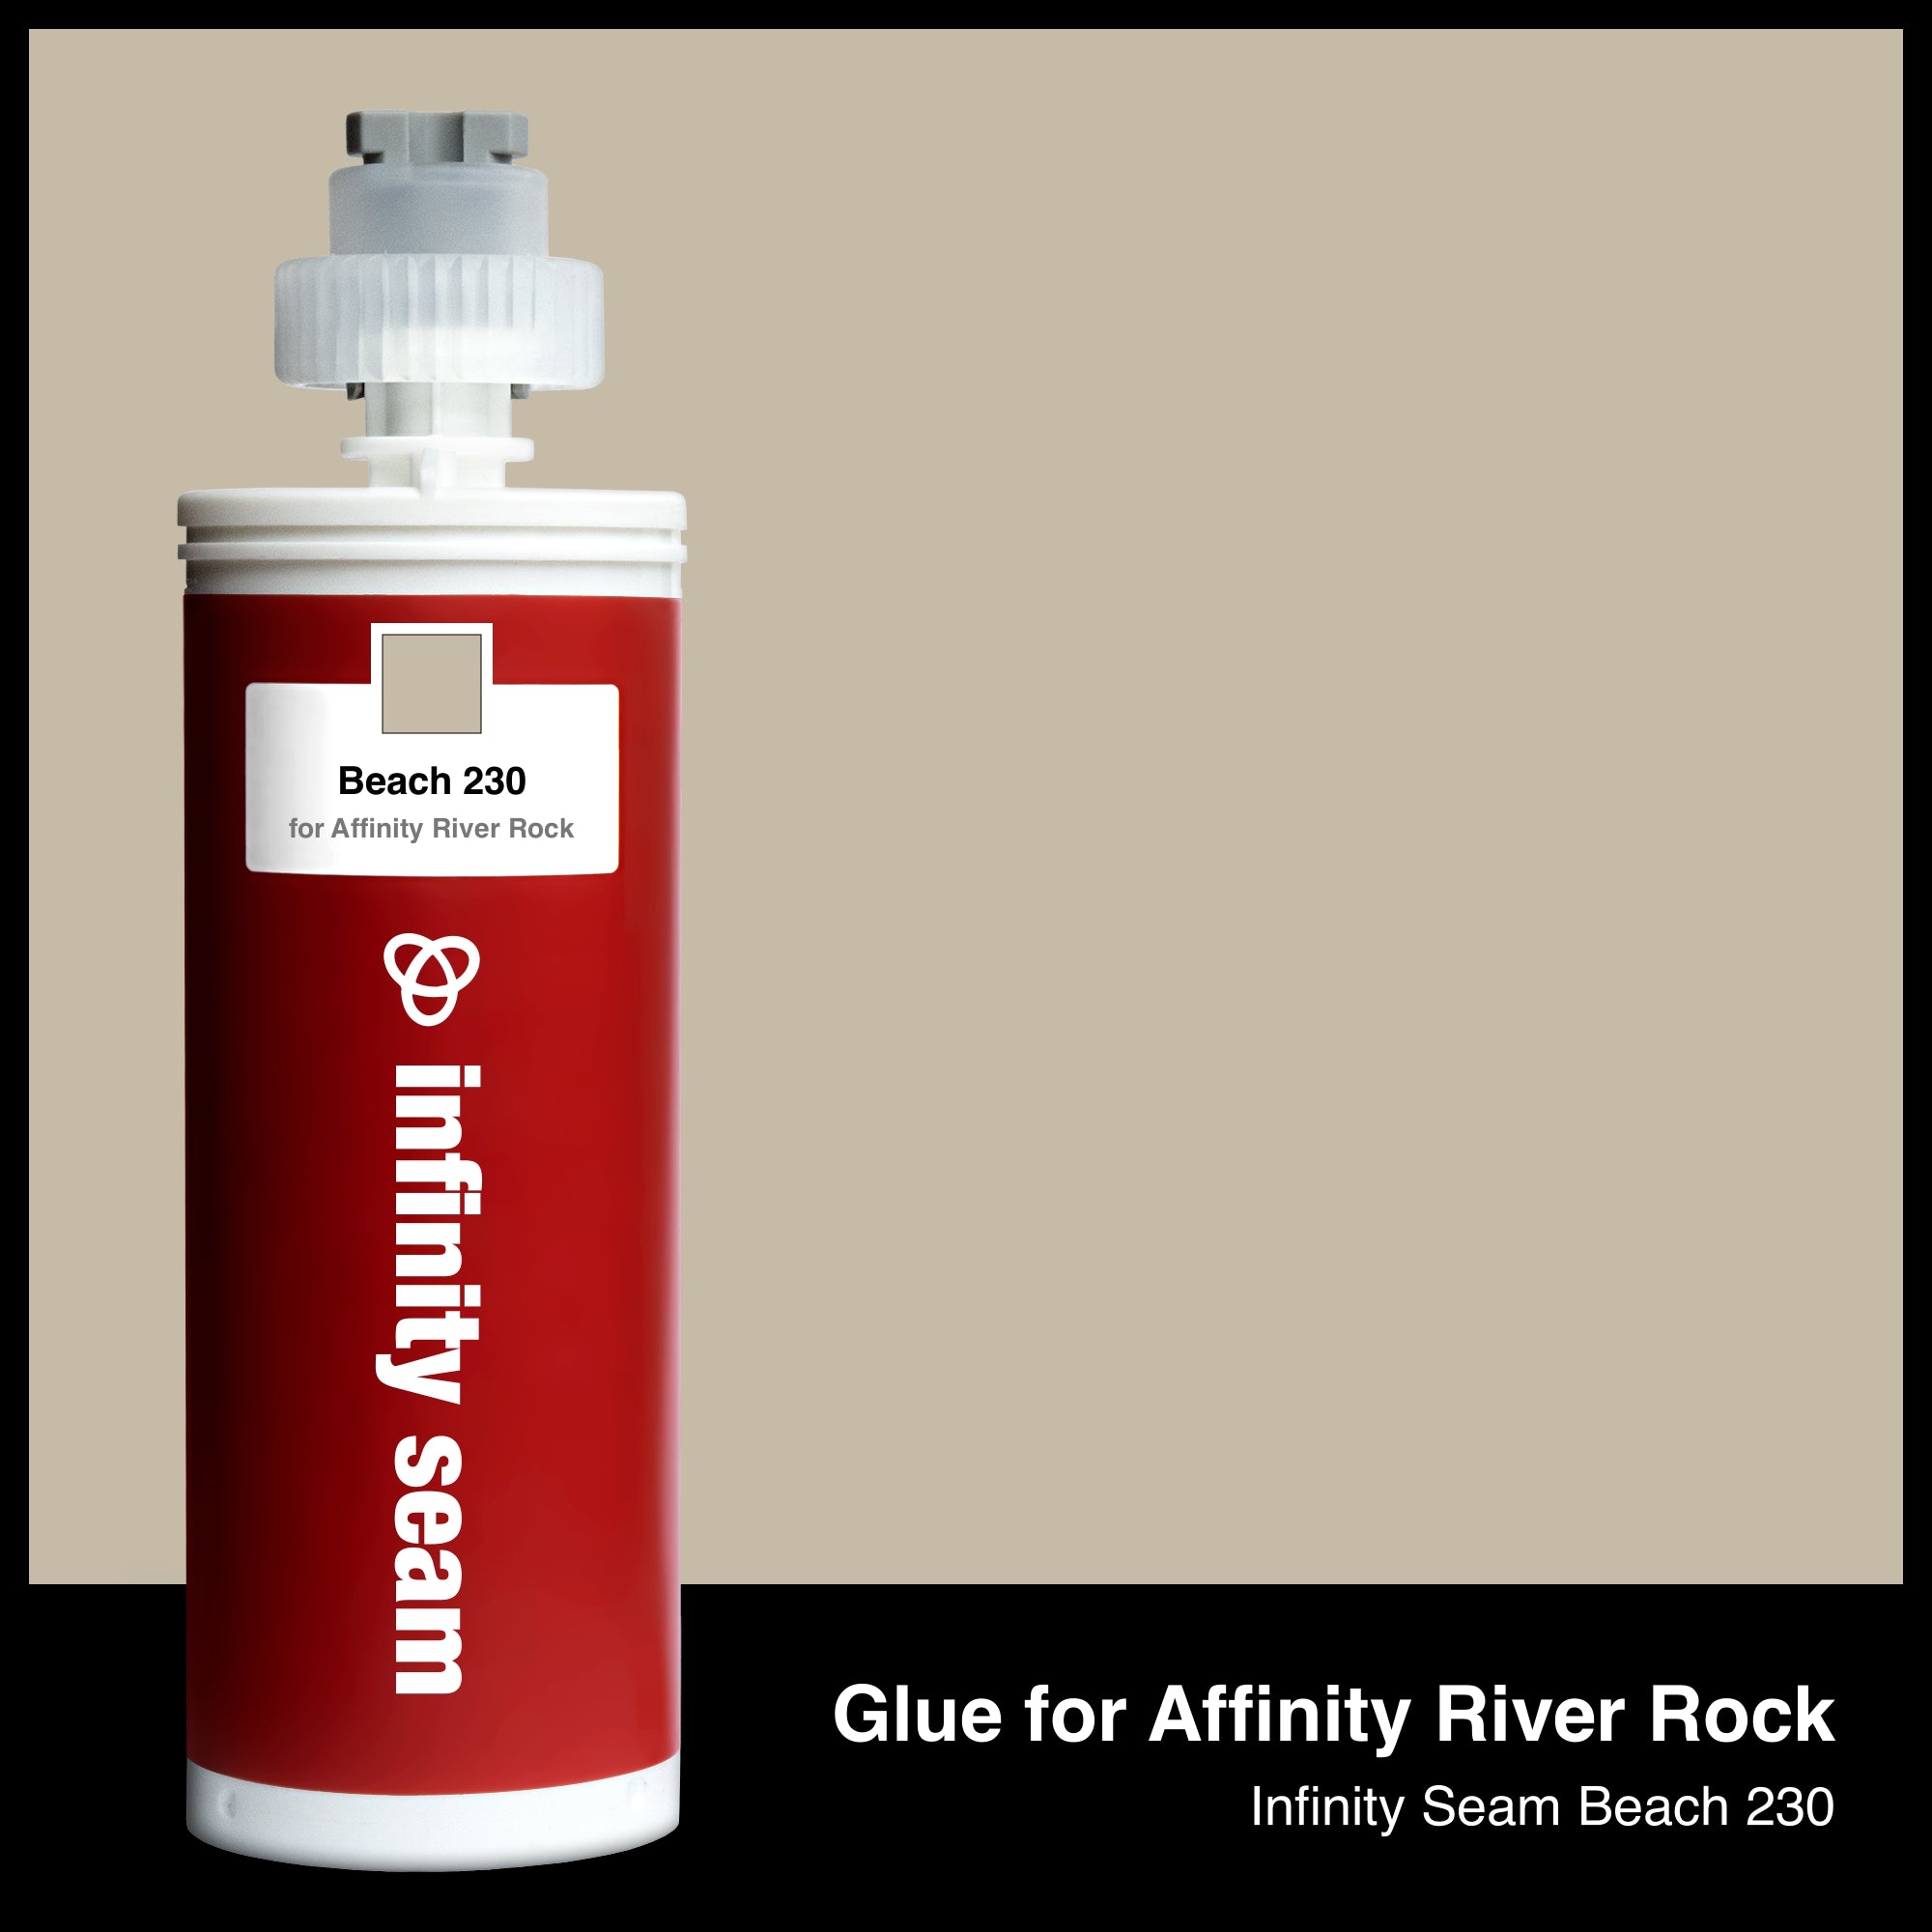 Glue for Affinity River Rock: Infinity Seam Beach 230